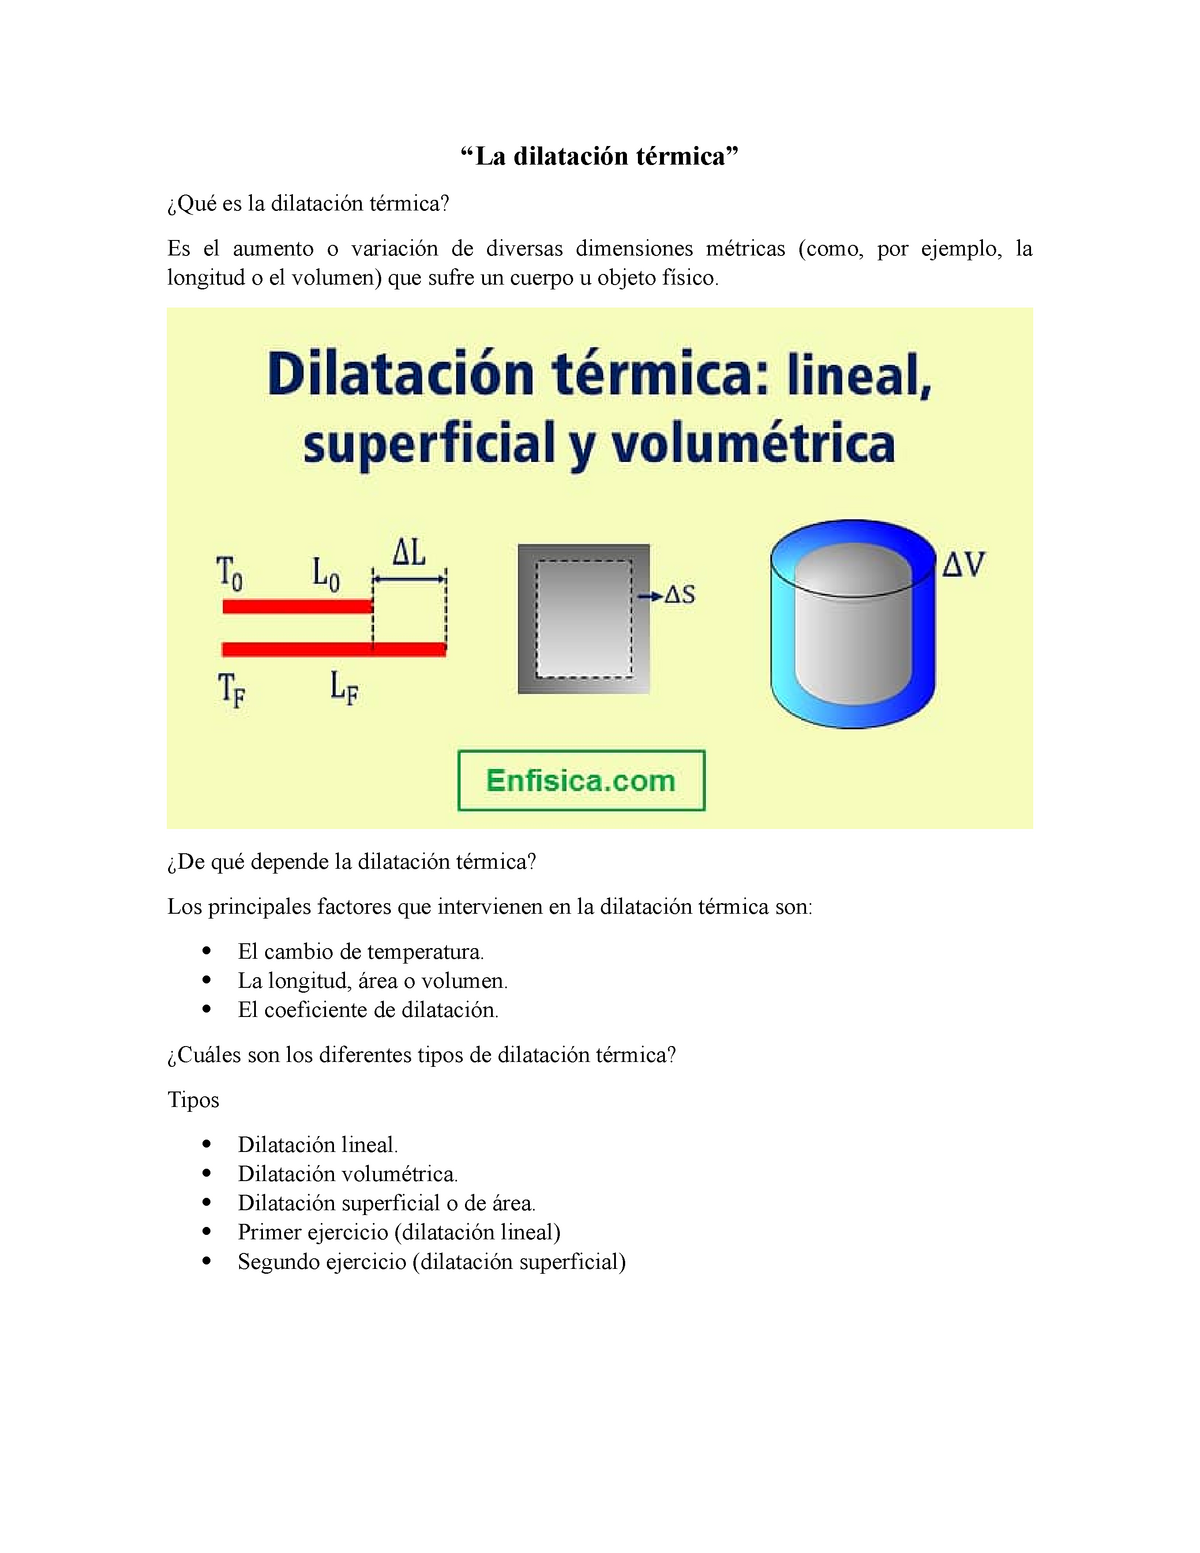 La dilatacion termica - Lecture notes 2 - “La dilatación térmica” ¿Qué es  la dilatación térmica? Es - Studocu